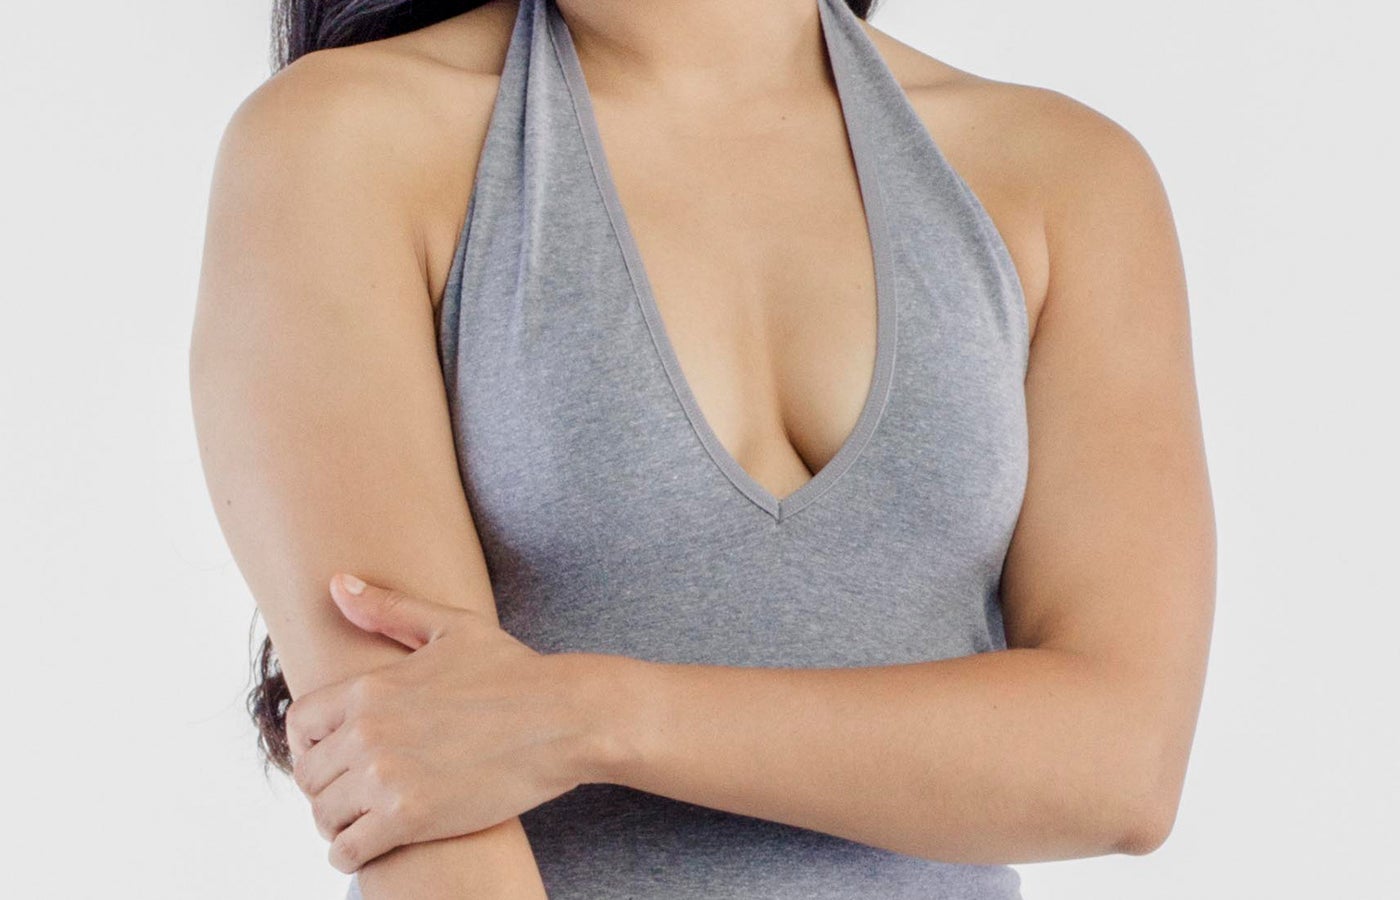 Wallpaper : strategic covering, cleavage, big boobs, removing bra